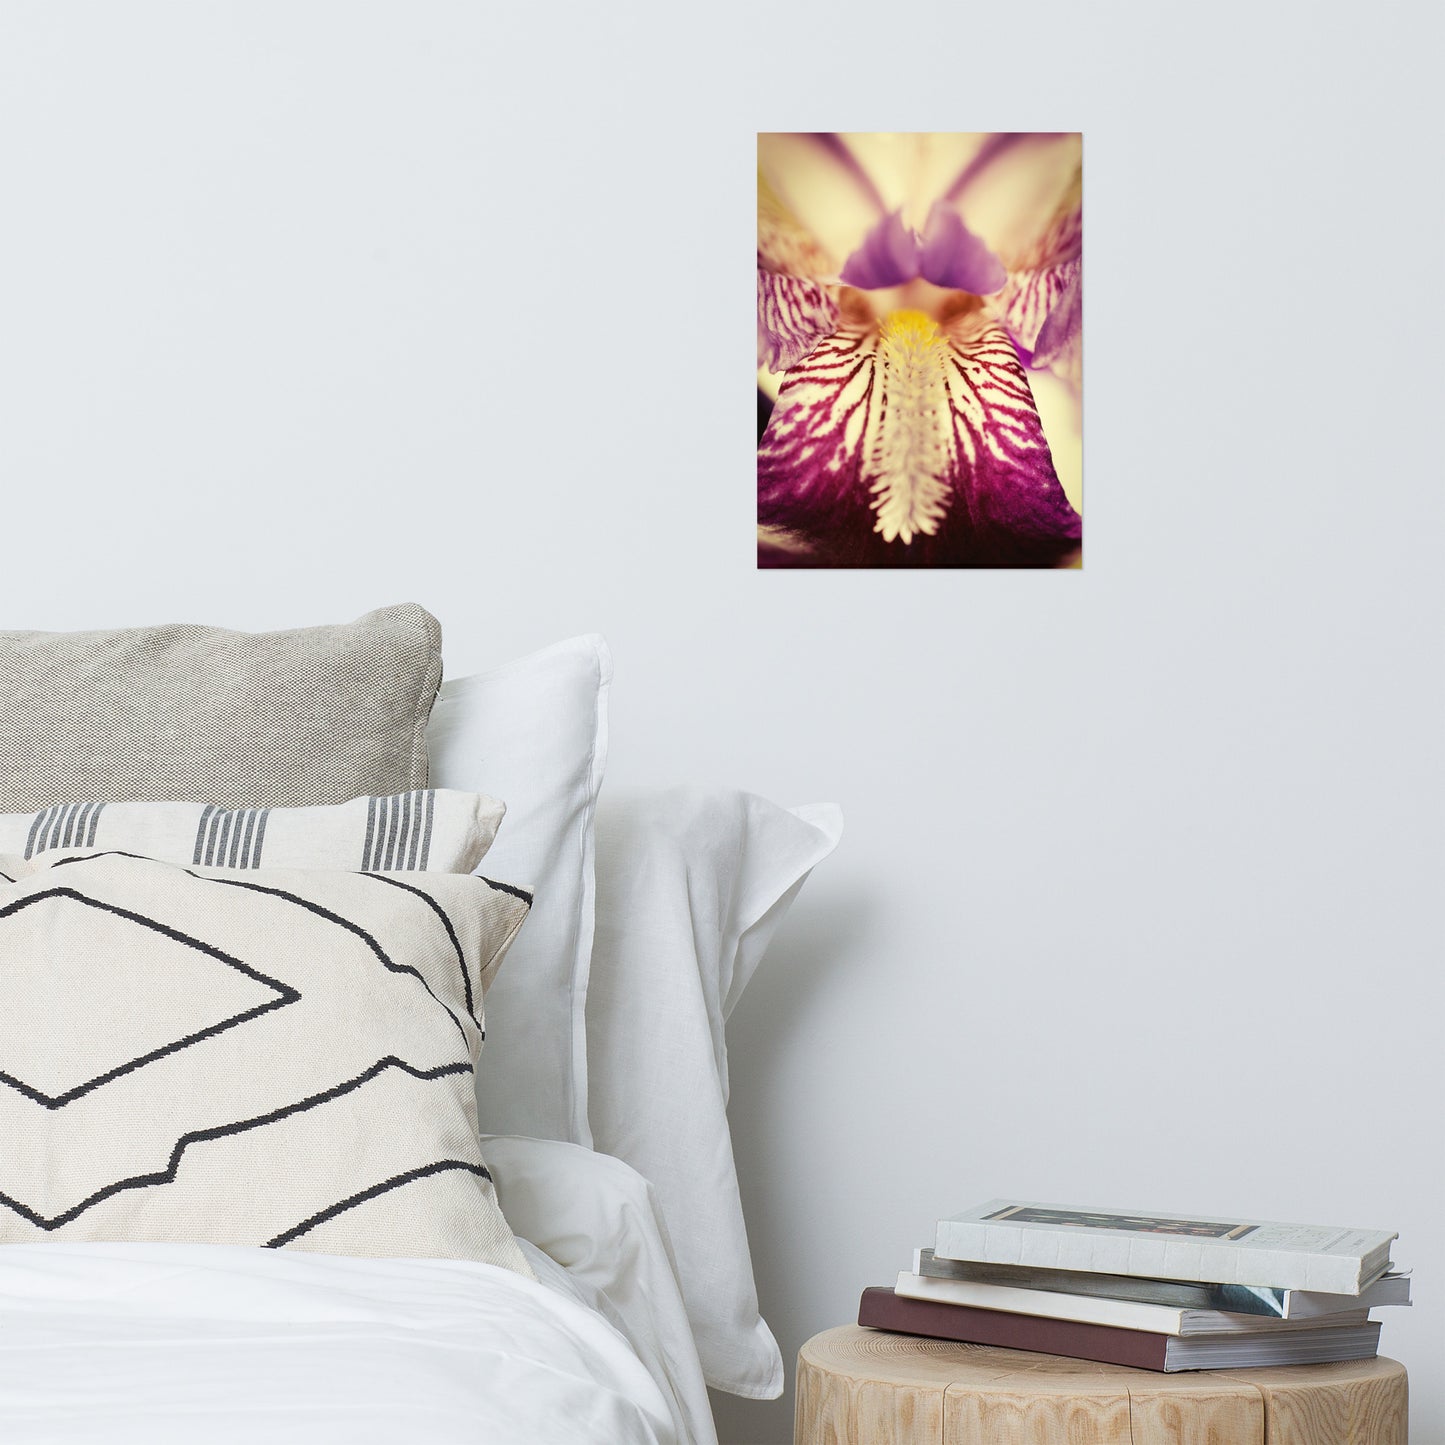 Floral Photography Prints: Antiqued Iris - Botanical / Floral / Flora / Flowers / Nature Photograph Loose / Unframed / Frameless / Frameable Wall Art Print - Artwork